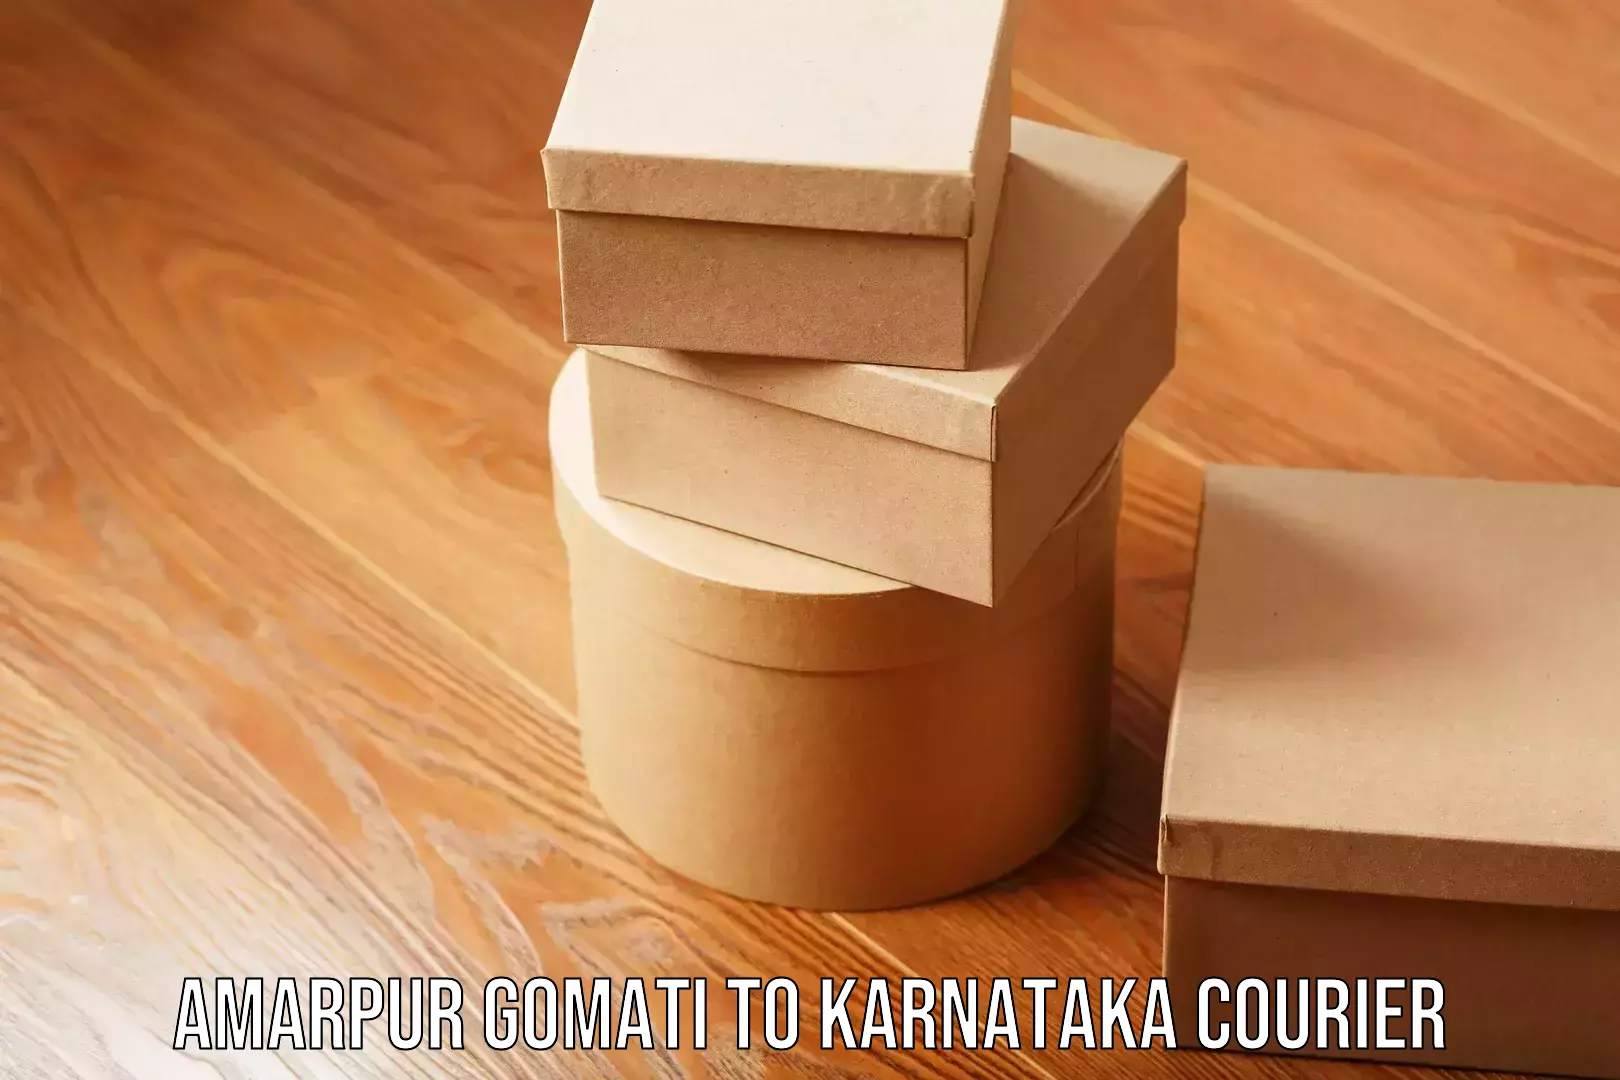 Courier service efficiency Amarpur Gomati to Karnataka